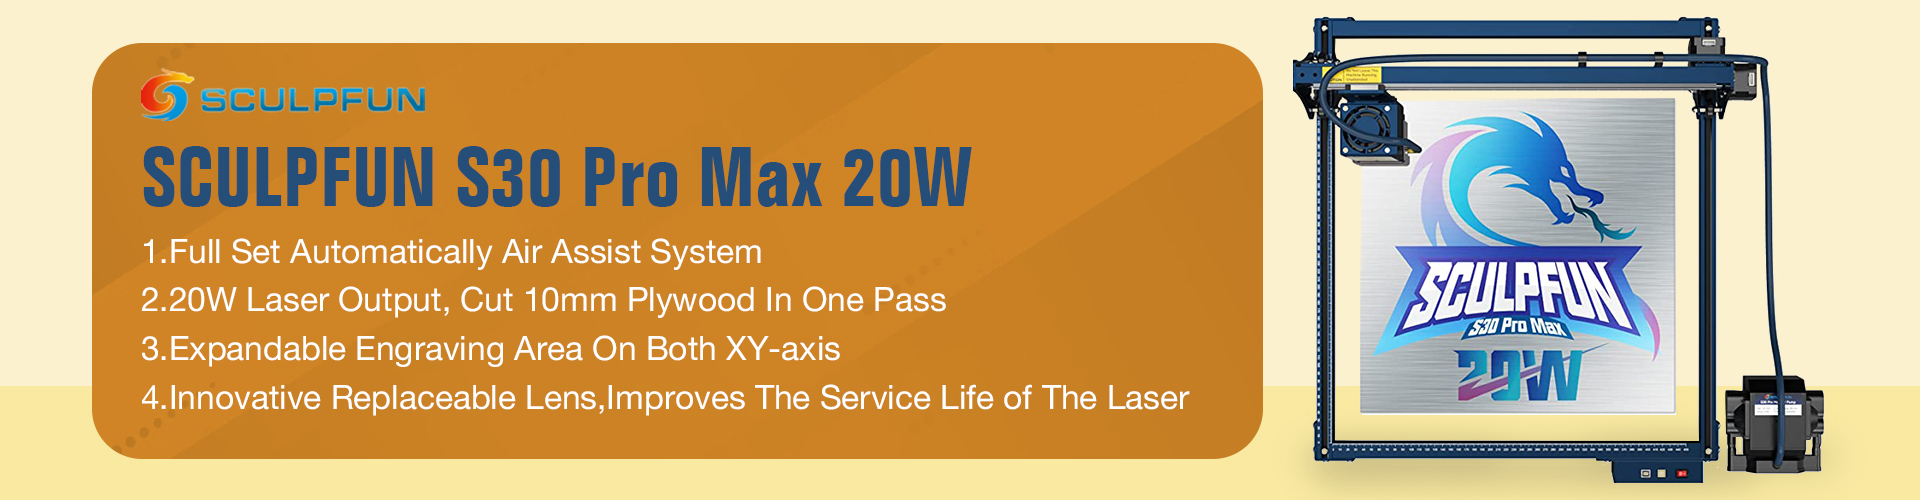 Sculpfun S30 Pro Max Laser Engraver